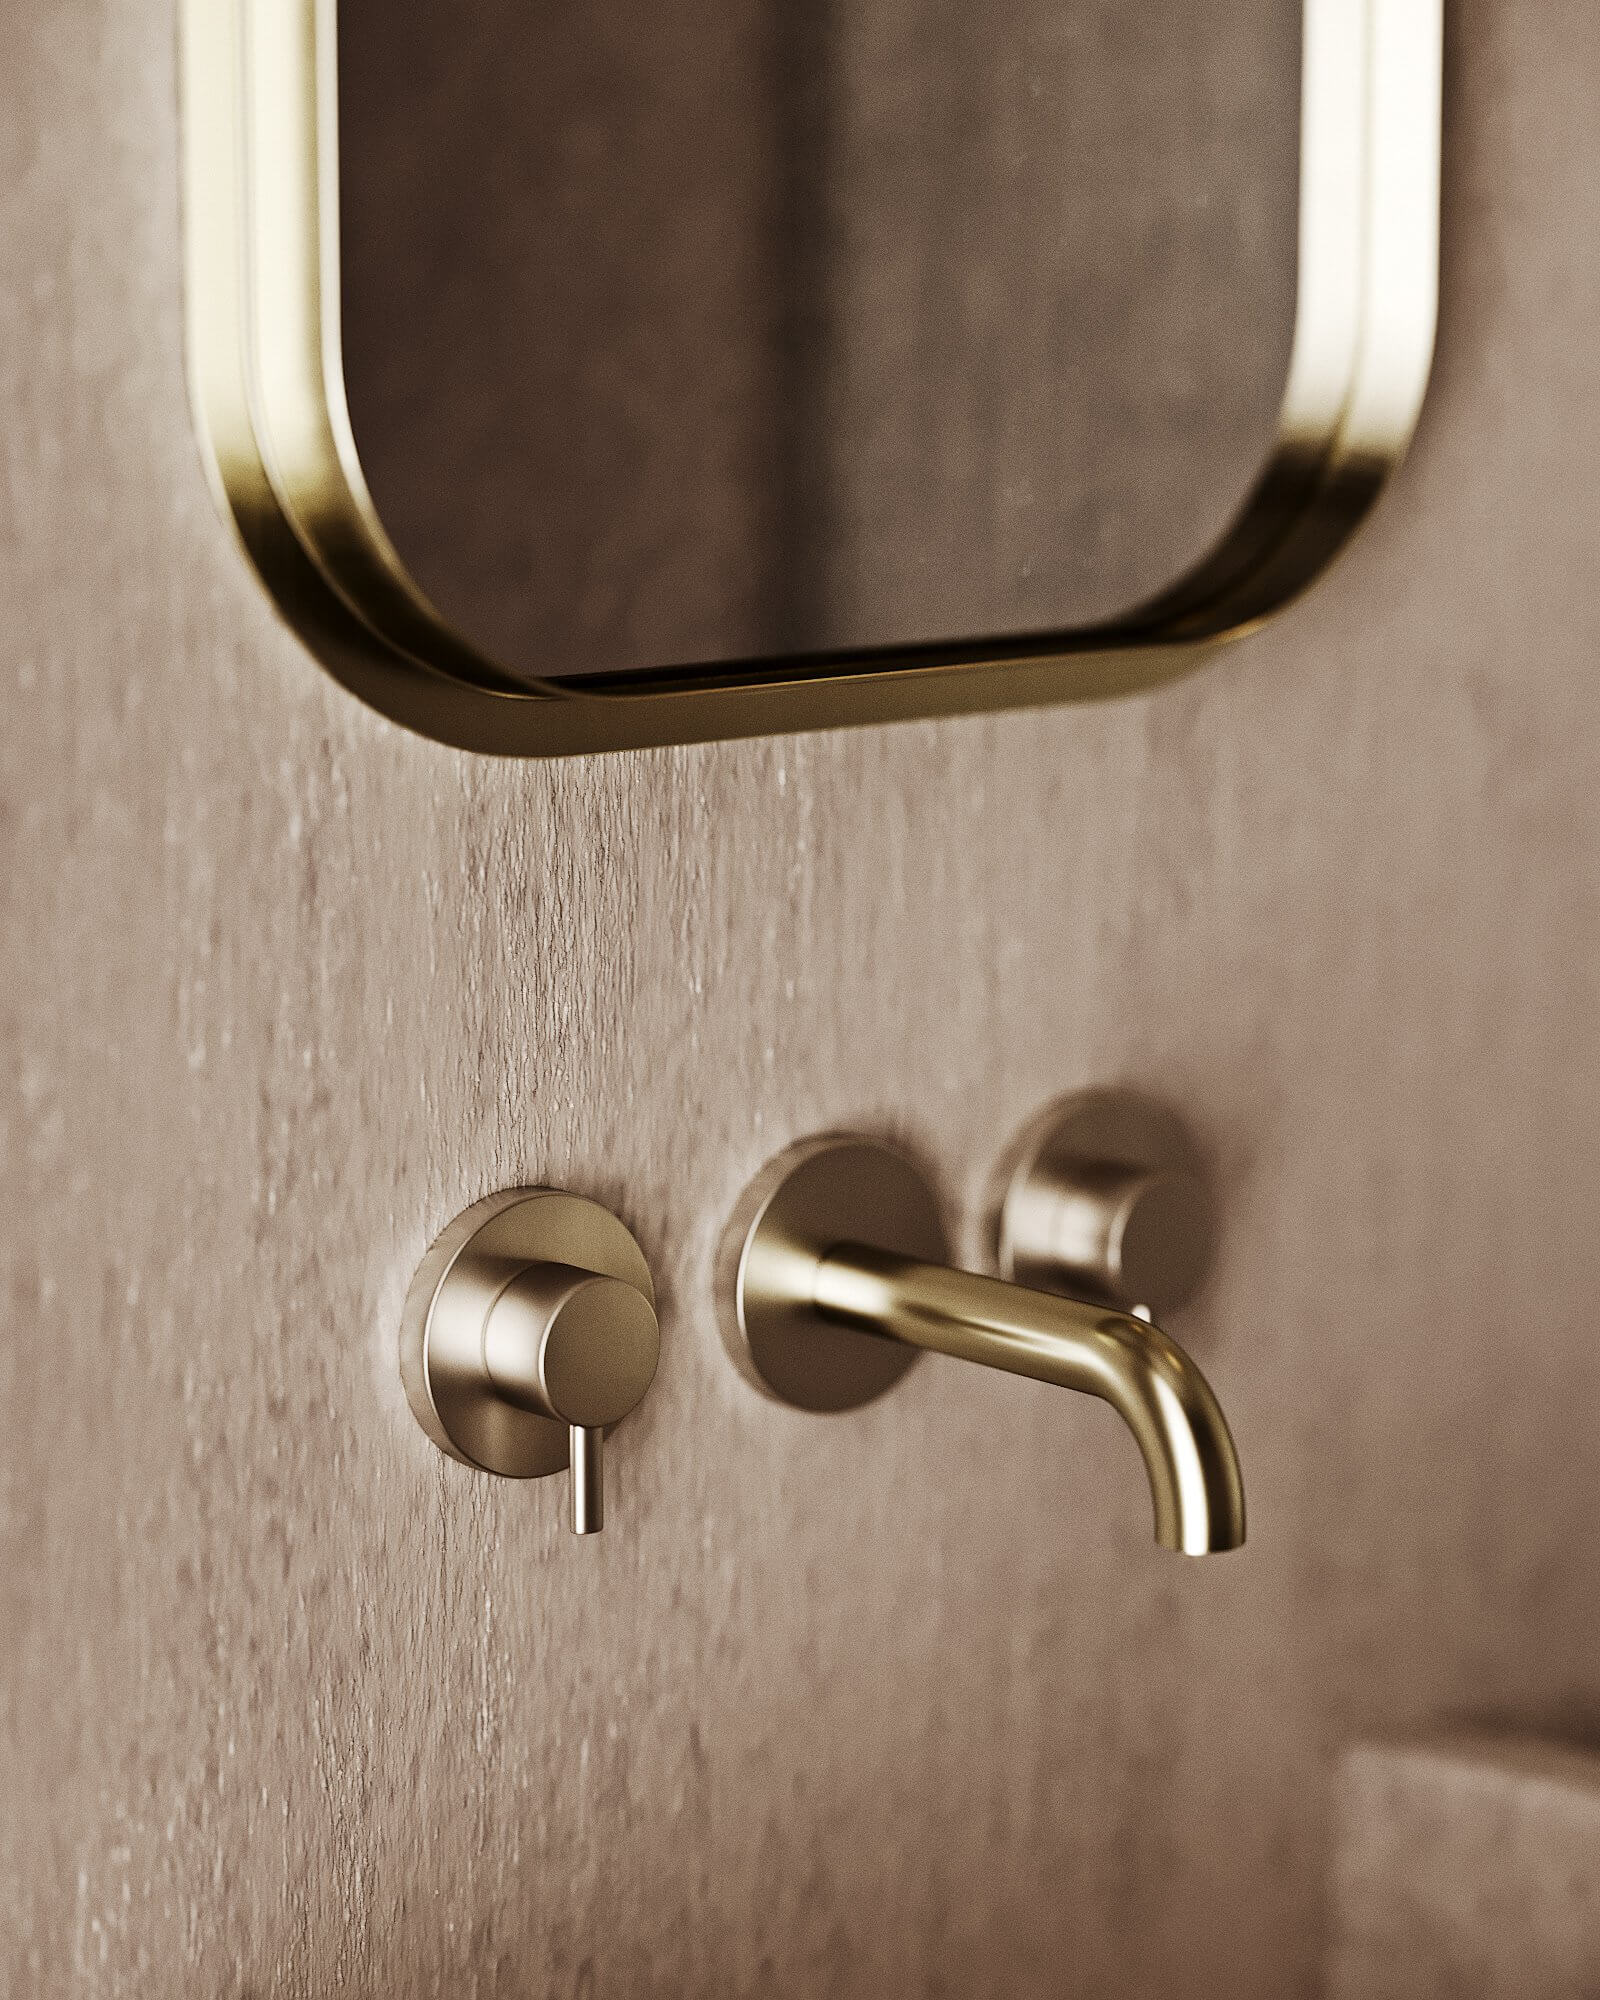 Monochrome bathroom design mirror gold frame gold faucet detail - cgi visualization